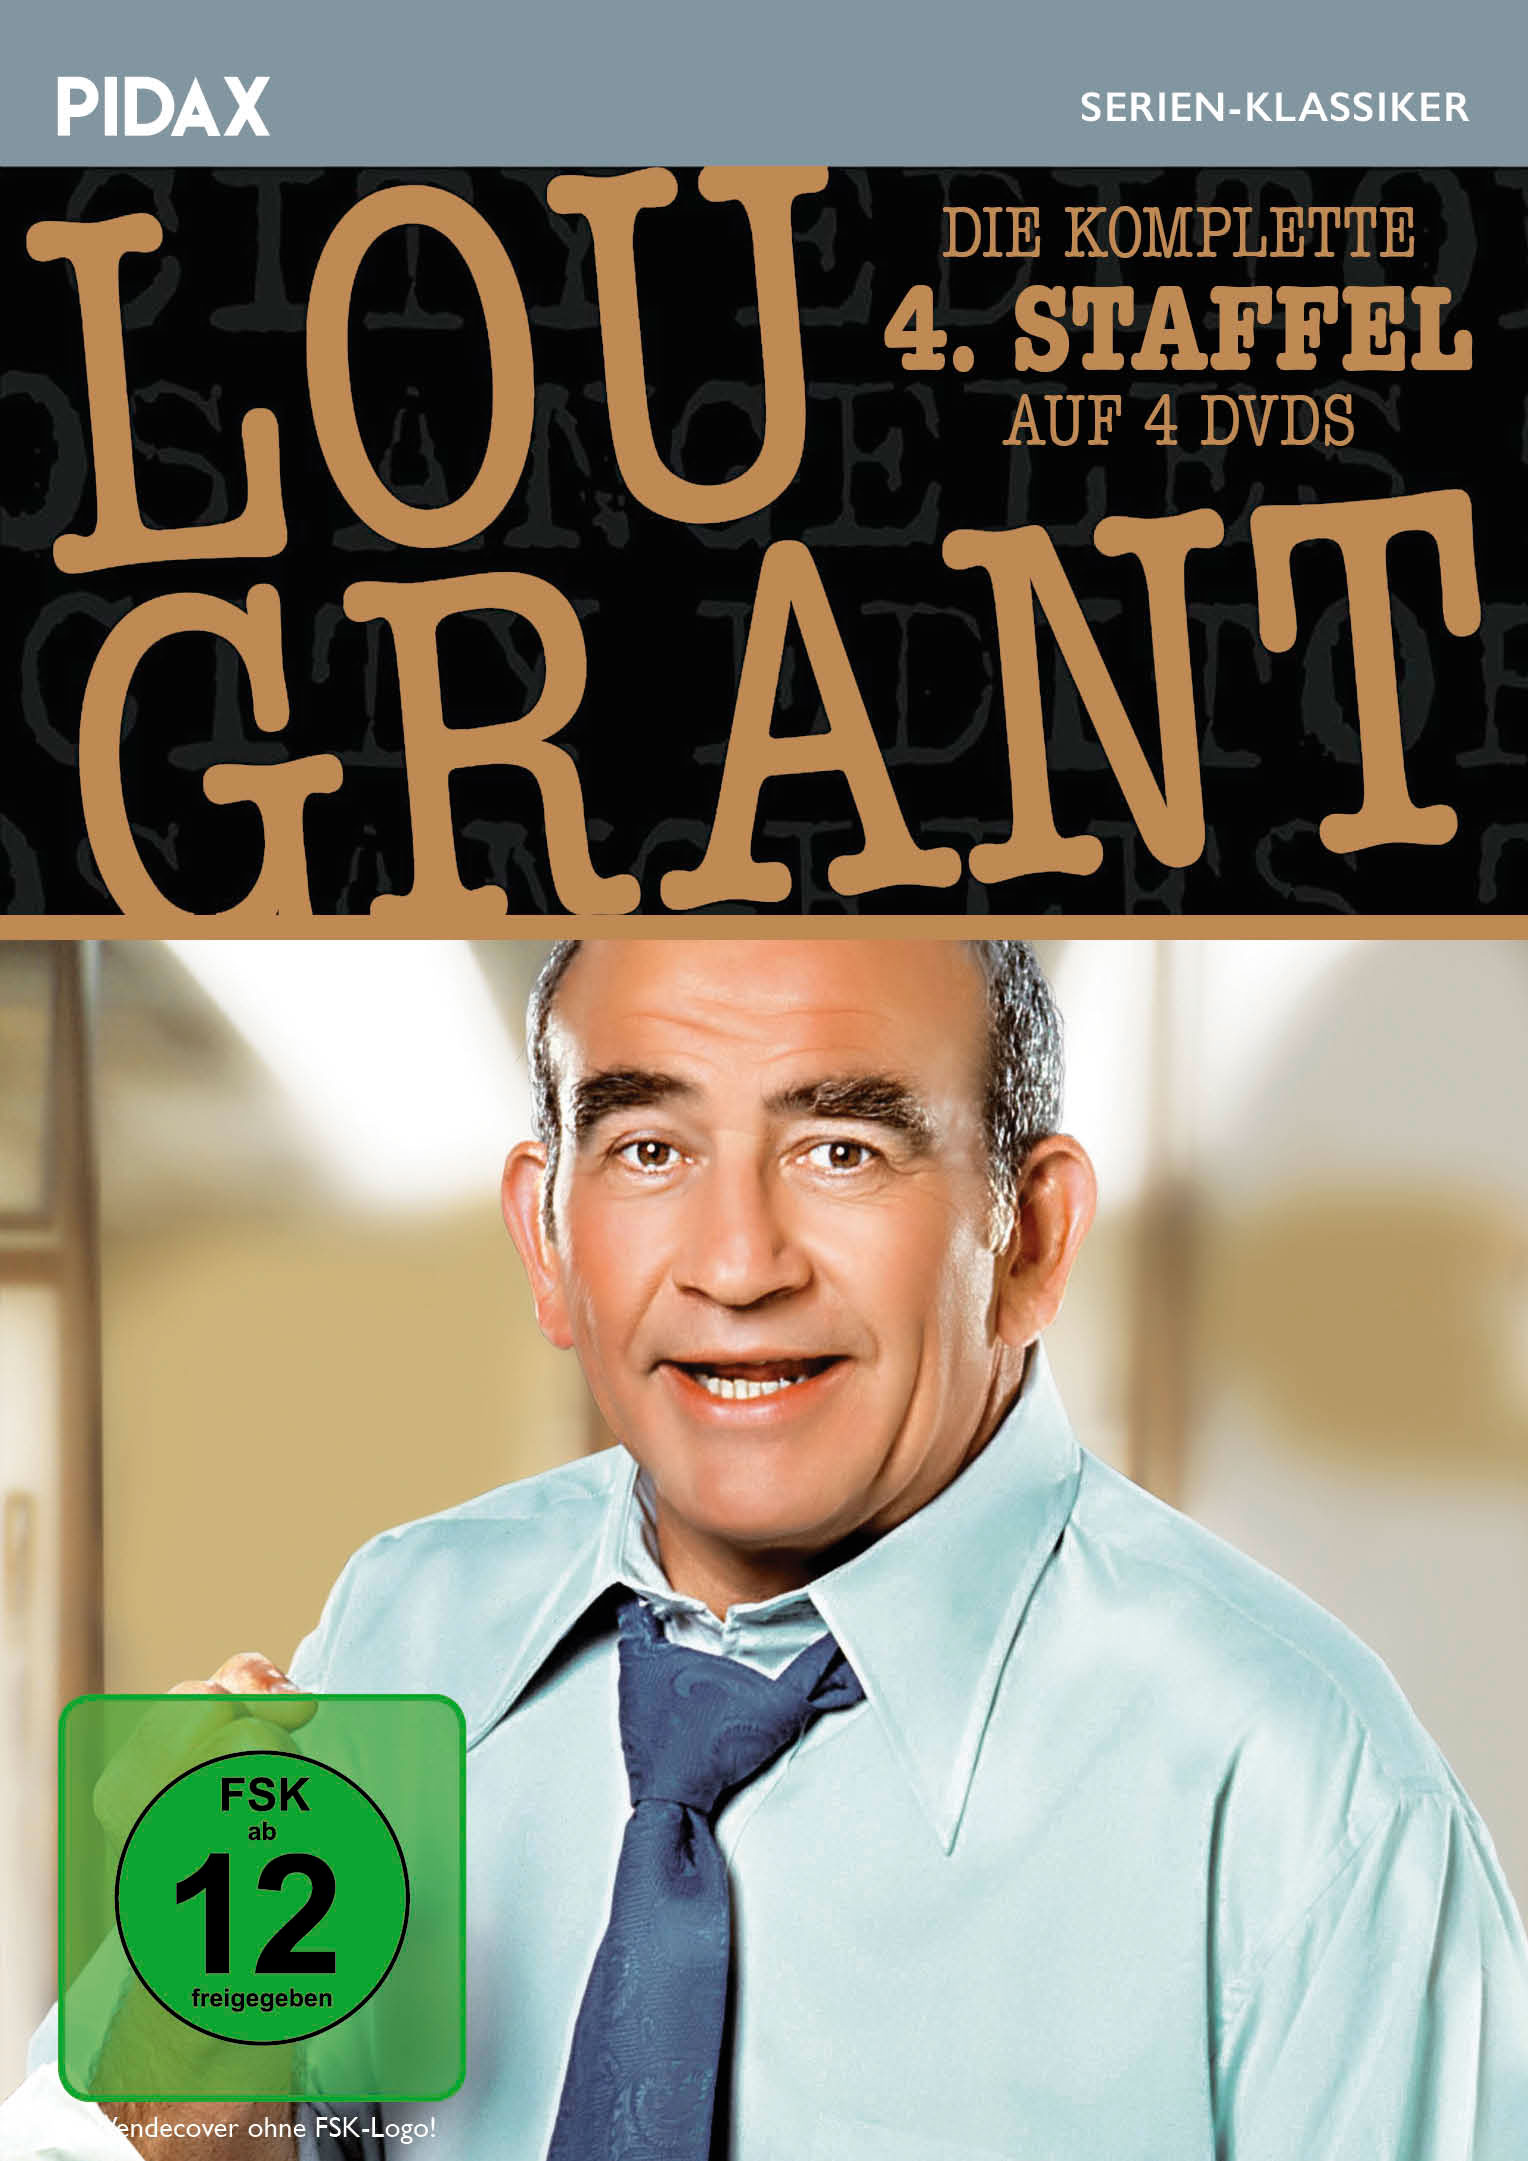 Lou Grant, Staffel 4